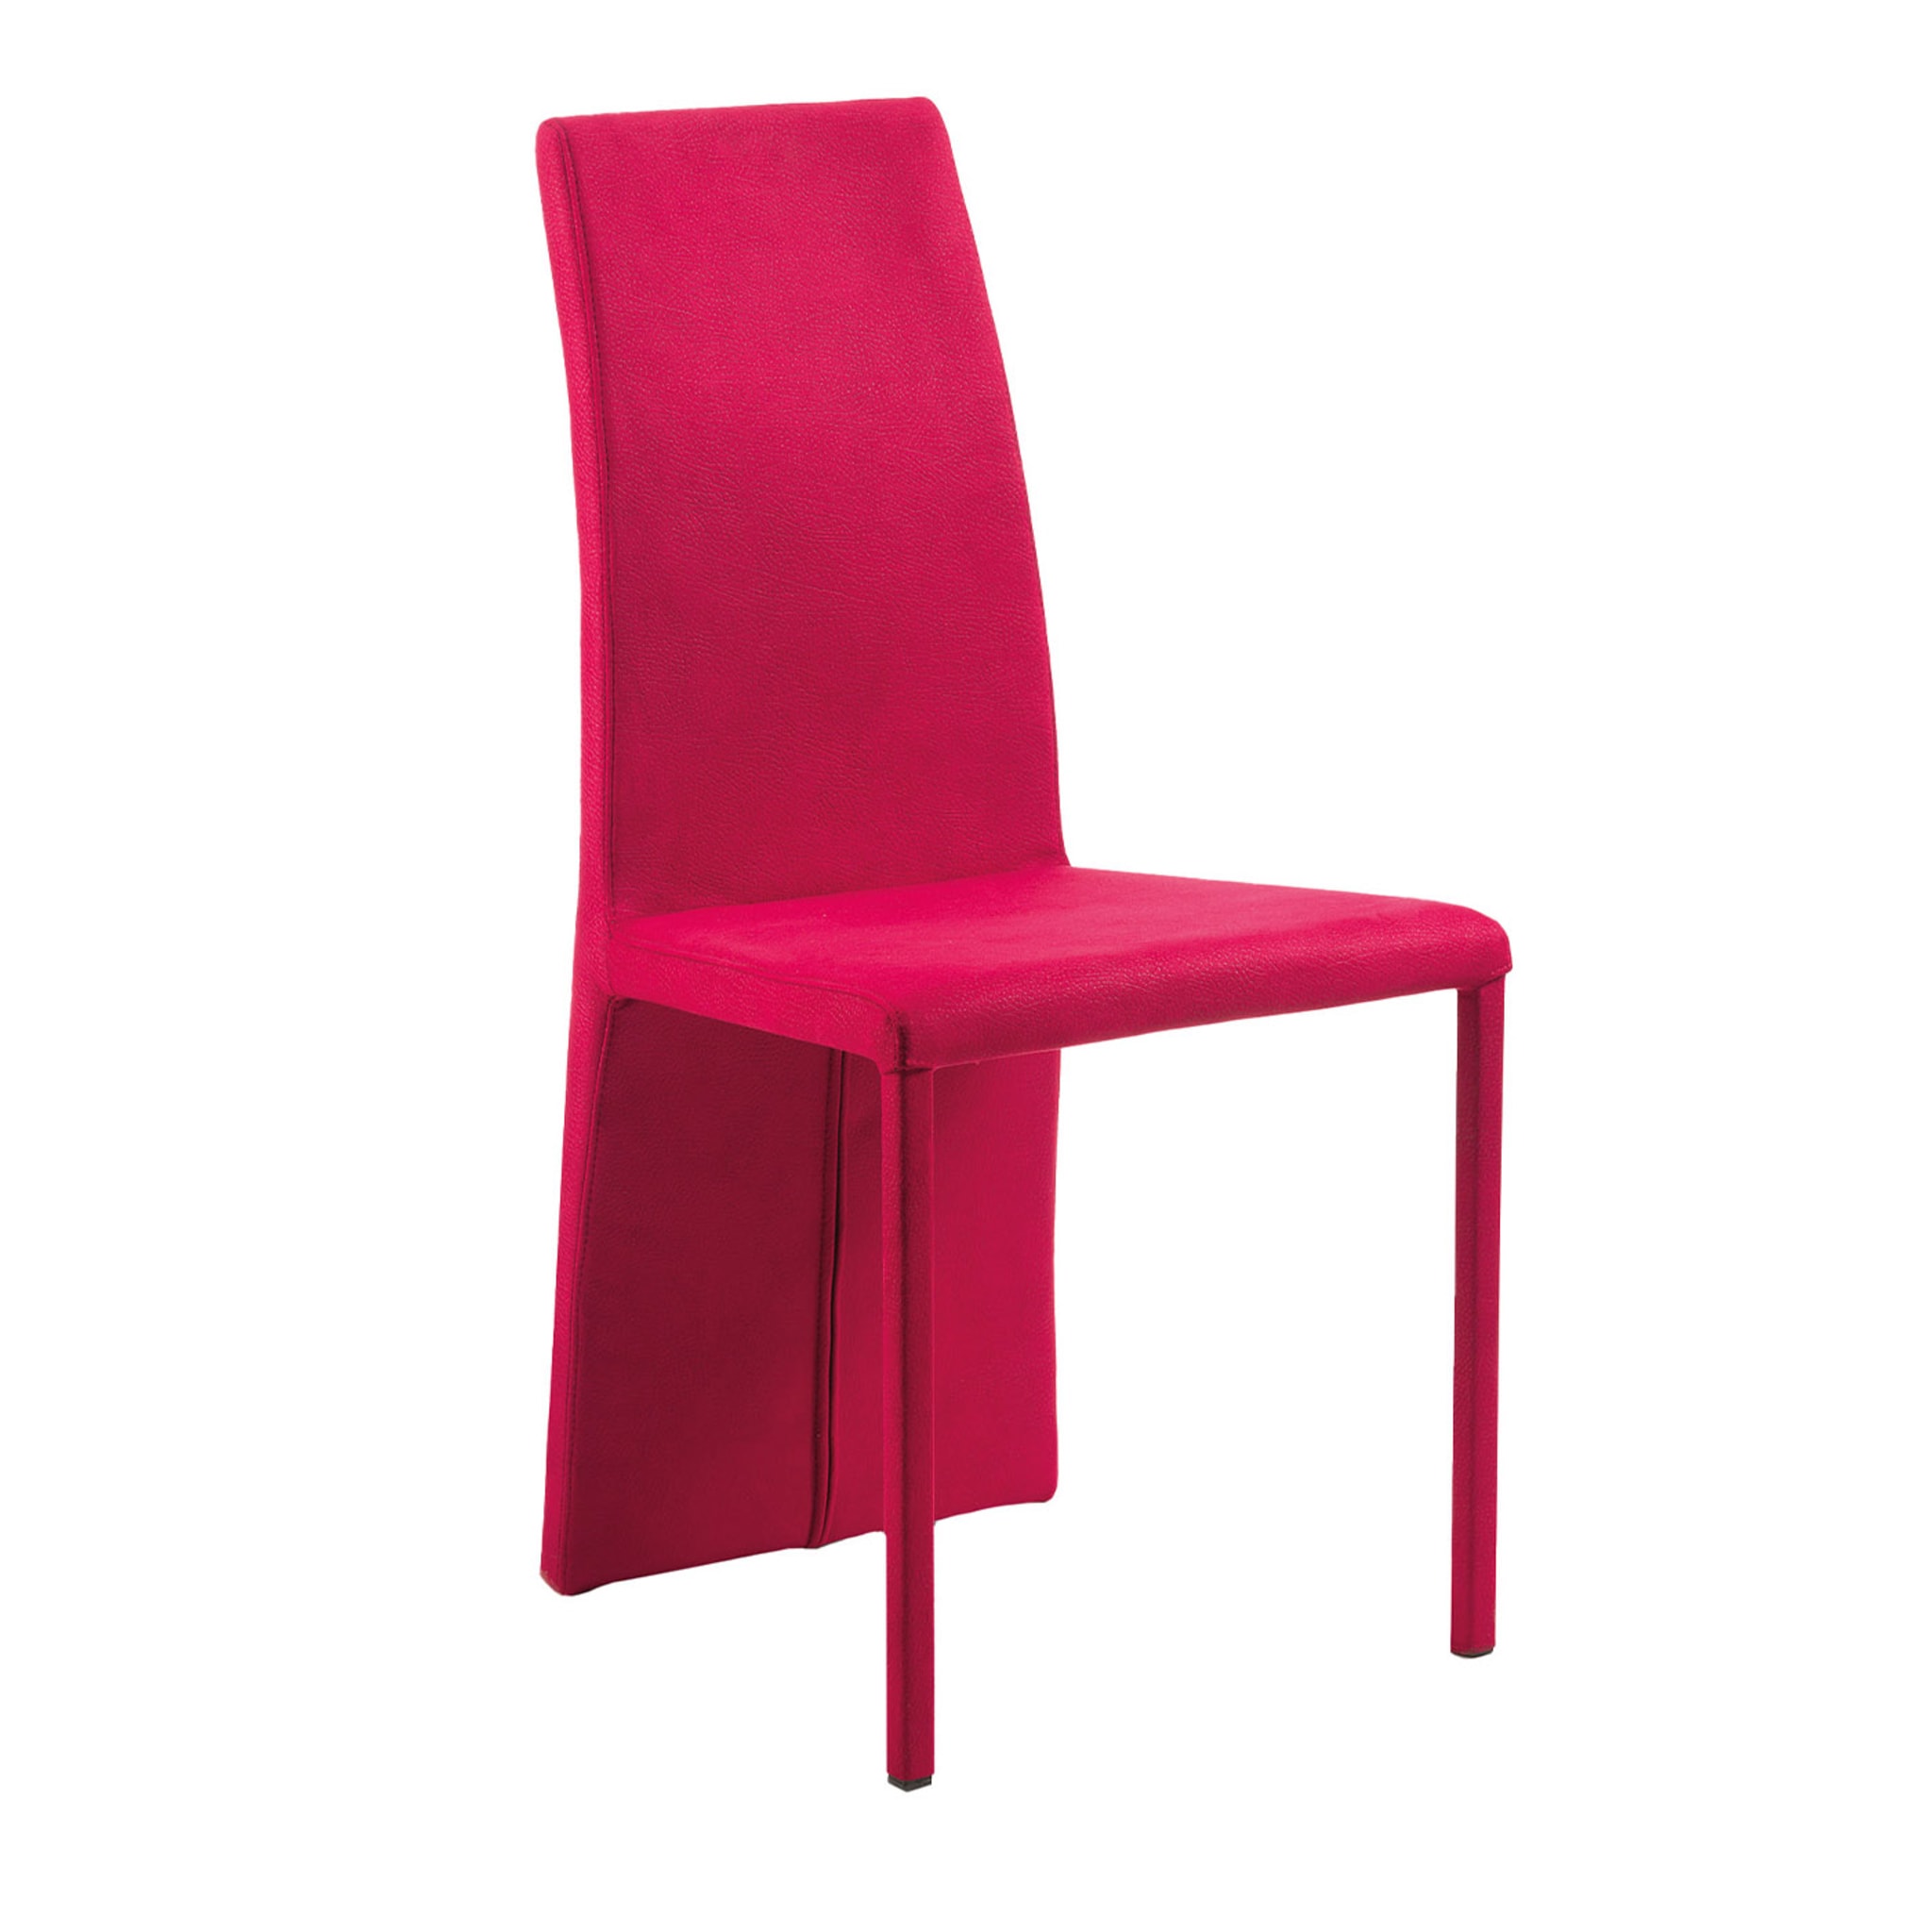 Motta Red Chair - Main view